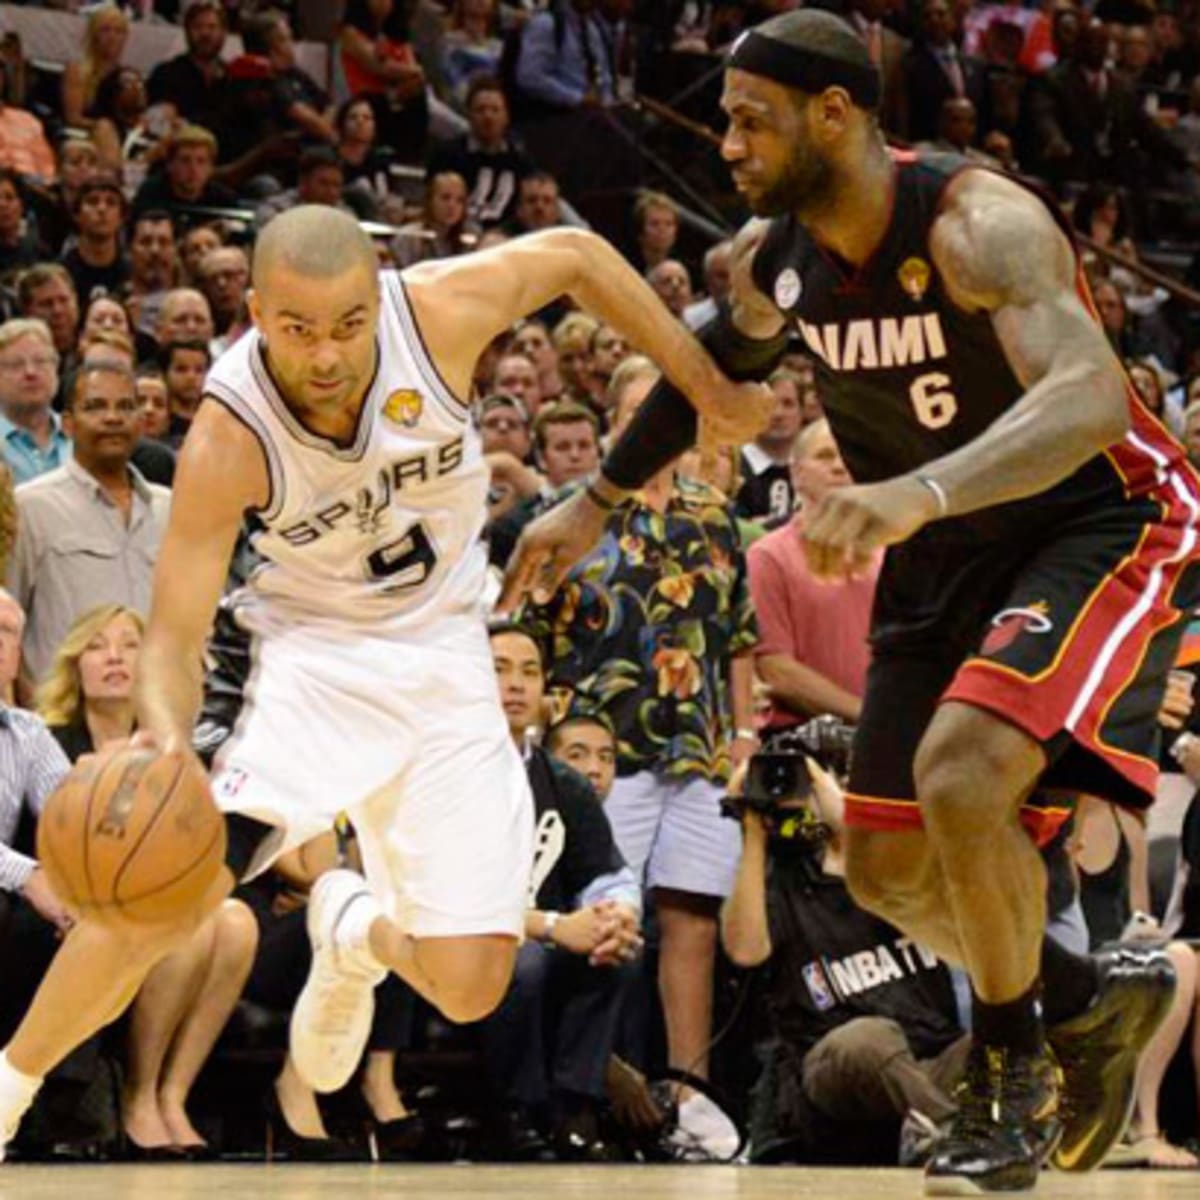 Spurs, Heat set for rematch of thrilling Finals